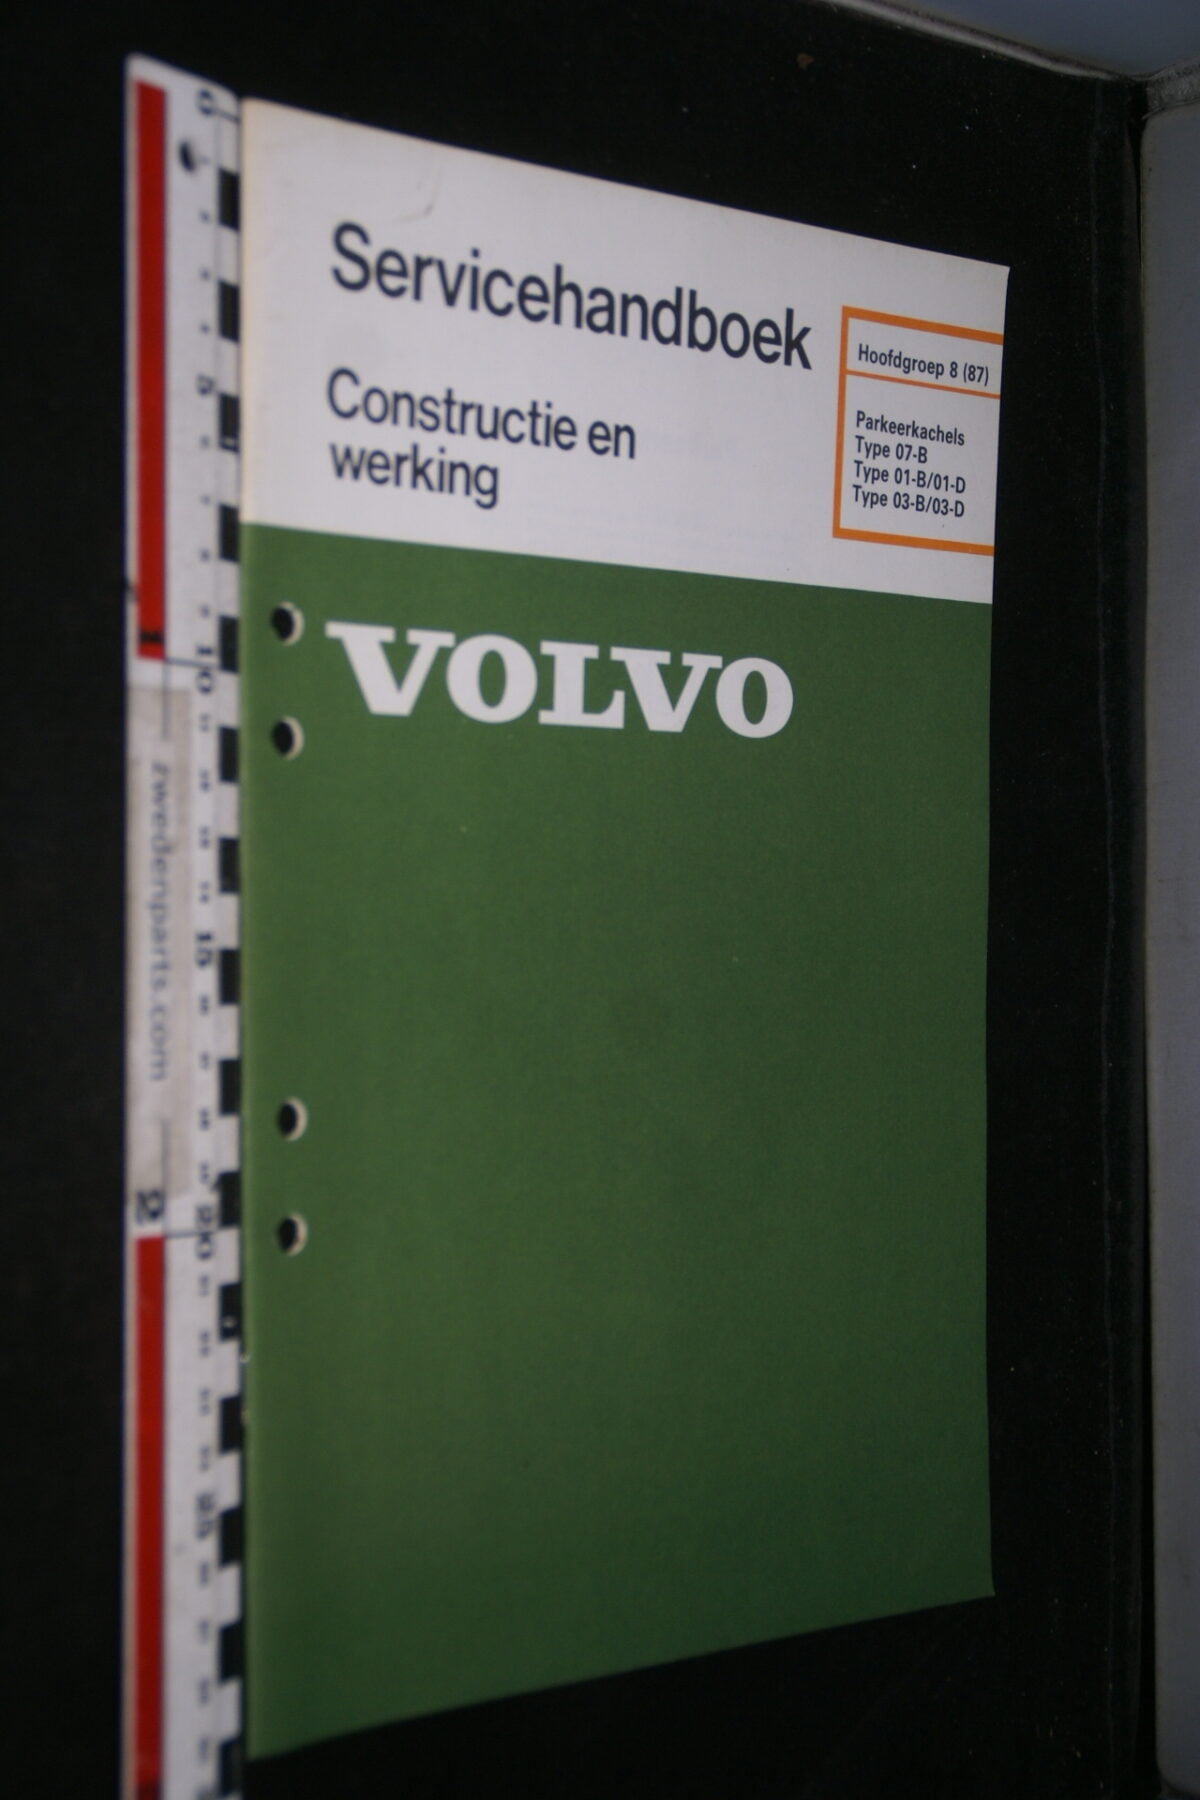 DSC02811 1983 origineel werkplaatsboek 8(87) Volvo parkeerkachel, 1 van 600, nr TP 30211-2-b2d6a0be